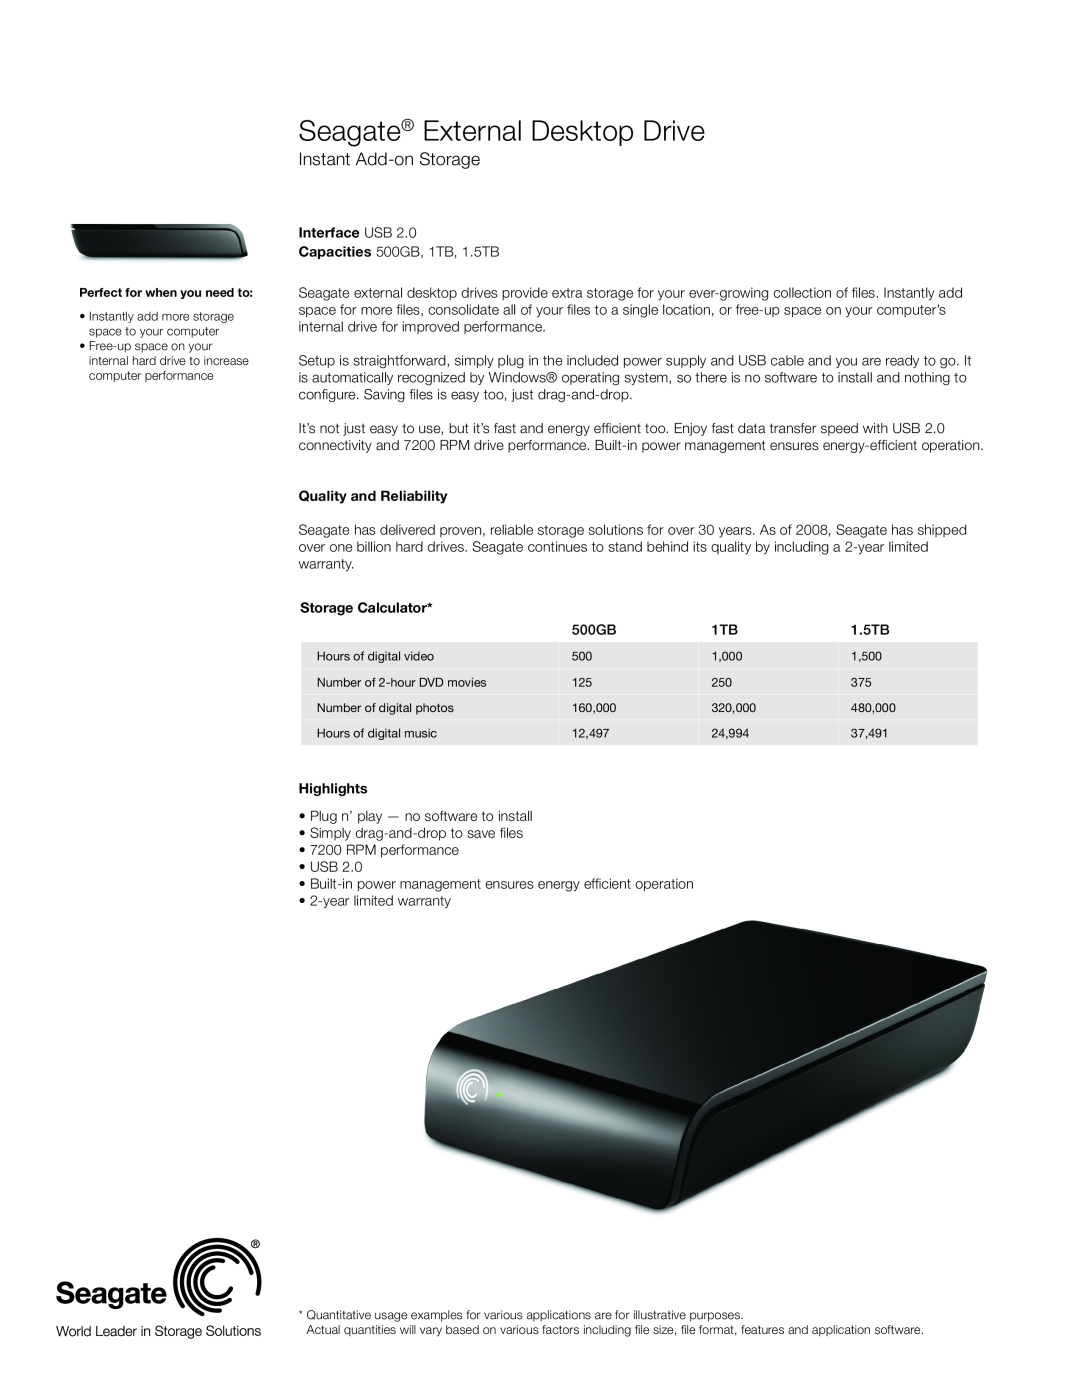 Seagate ST305004EXM101-RK warranty Seagate External Desktop Drive, Instant Add-on Storage, Interface USB, Highlights 